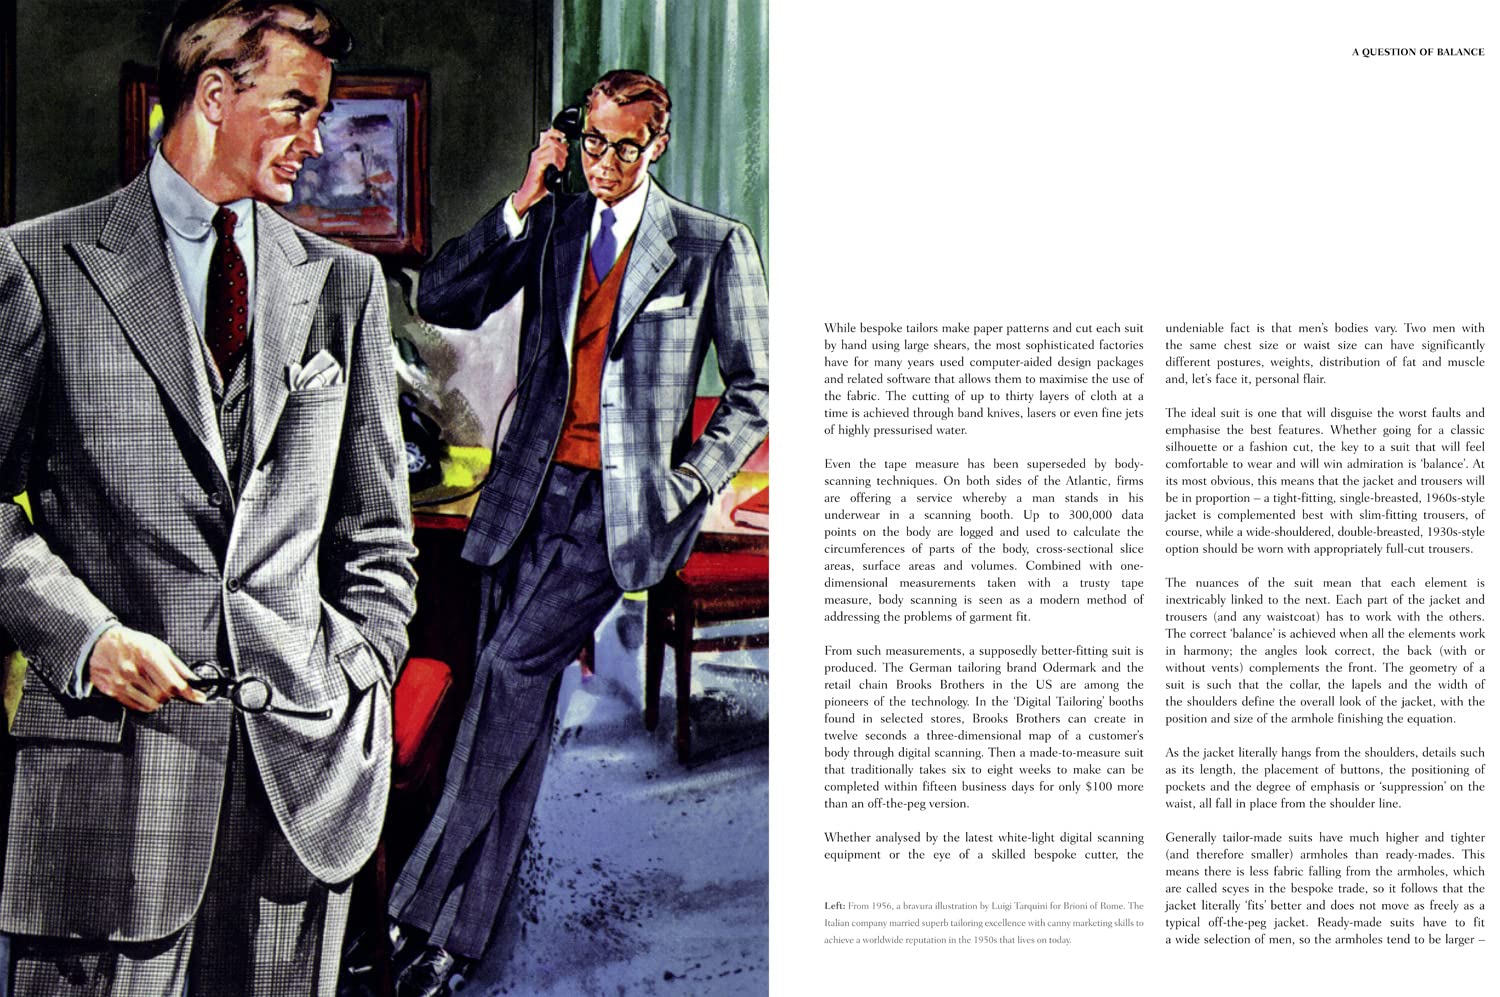 Sharp Suits: A Celebration of Men's Tailoring